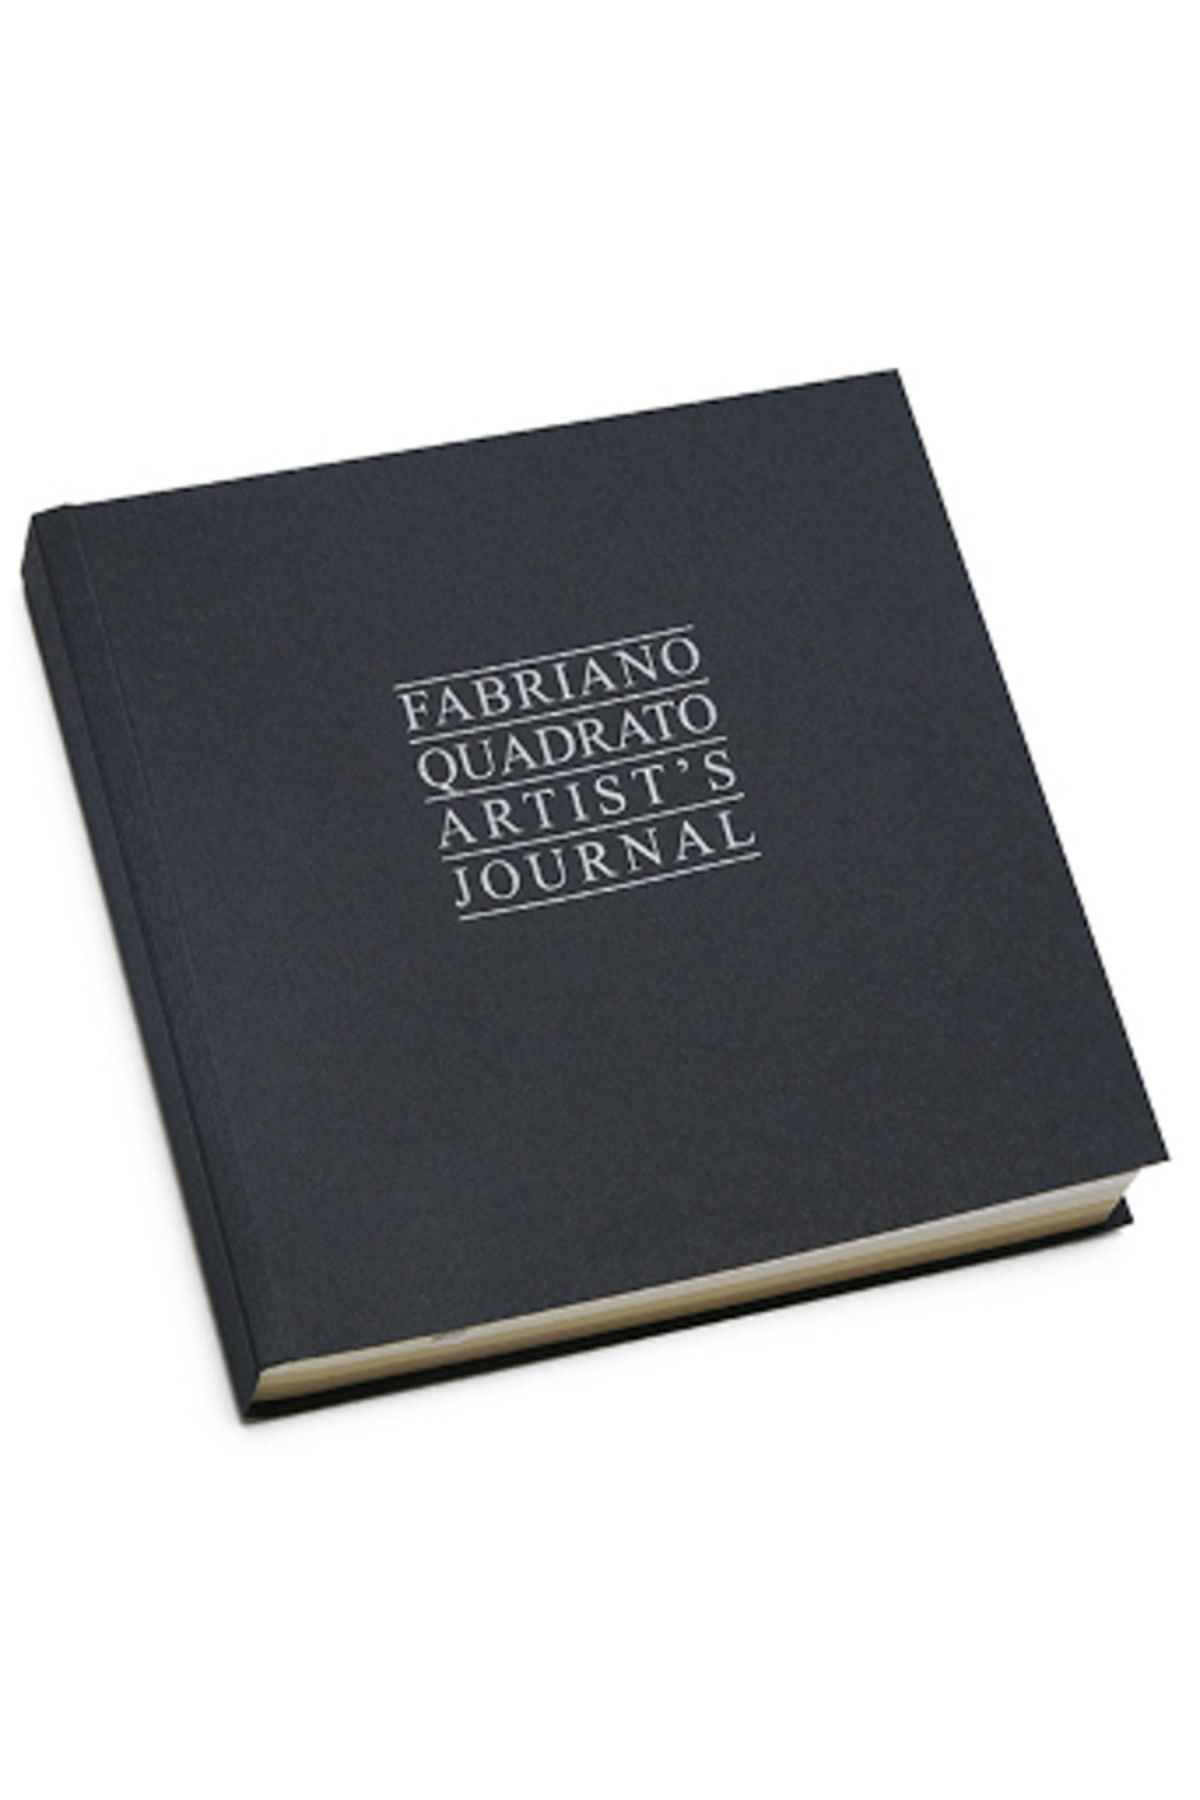 Fabriano Quadrato Artist's Journal, Siyah Kapaklı, 90gr - 16x16cm 39254